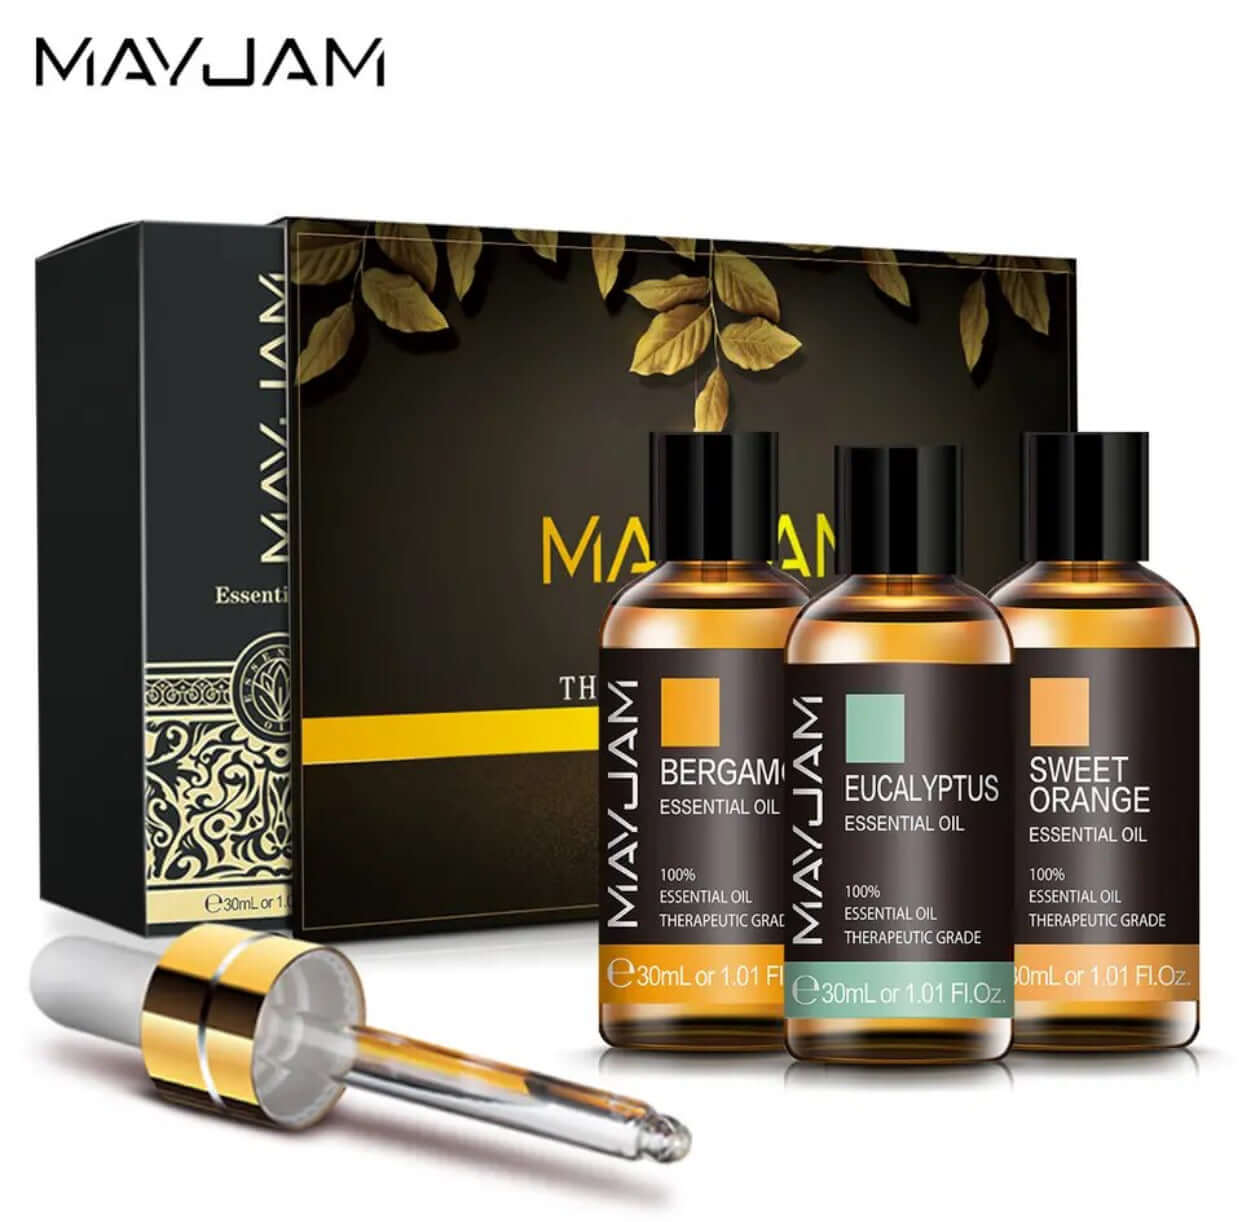 Set of 3 MAYJAM Essential Oils - Uplift Mood - Pamper your senses with sweet orange, eucalyptus & bergamot